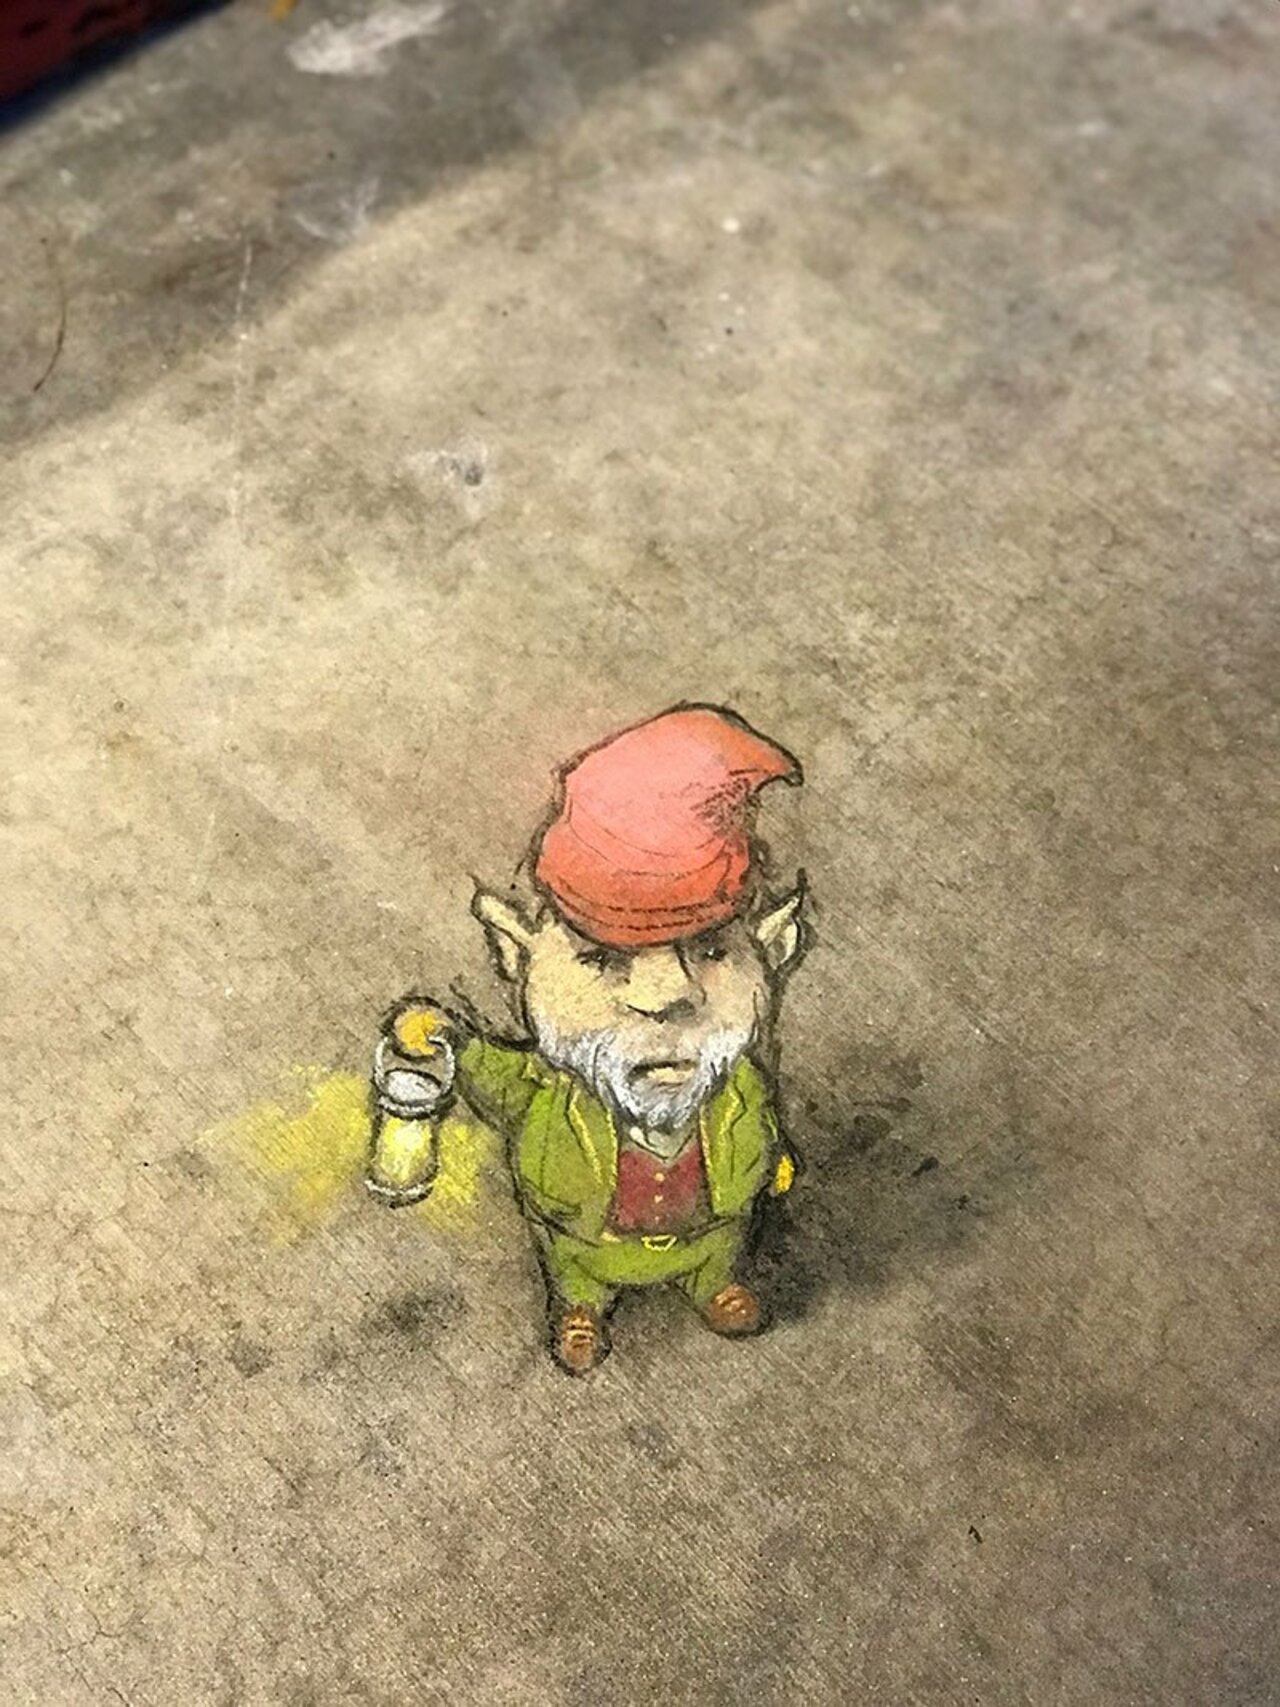 Met a tiny Diogenes on Liberty Street yesterday. He looked tired but determined. #streetart #sidewalkchalk #graffiti #cynic #searchingforanhonestman https://t.co/fYp9hDuwVM